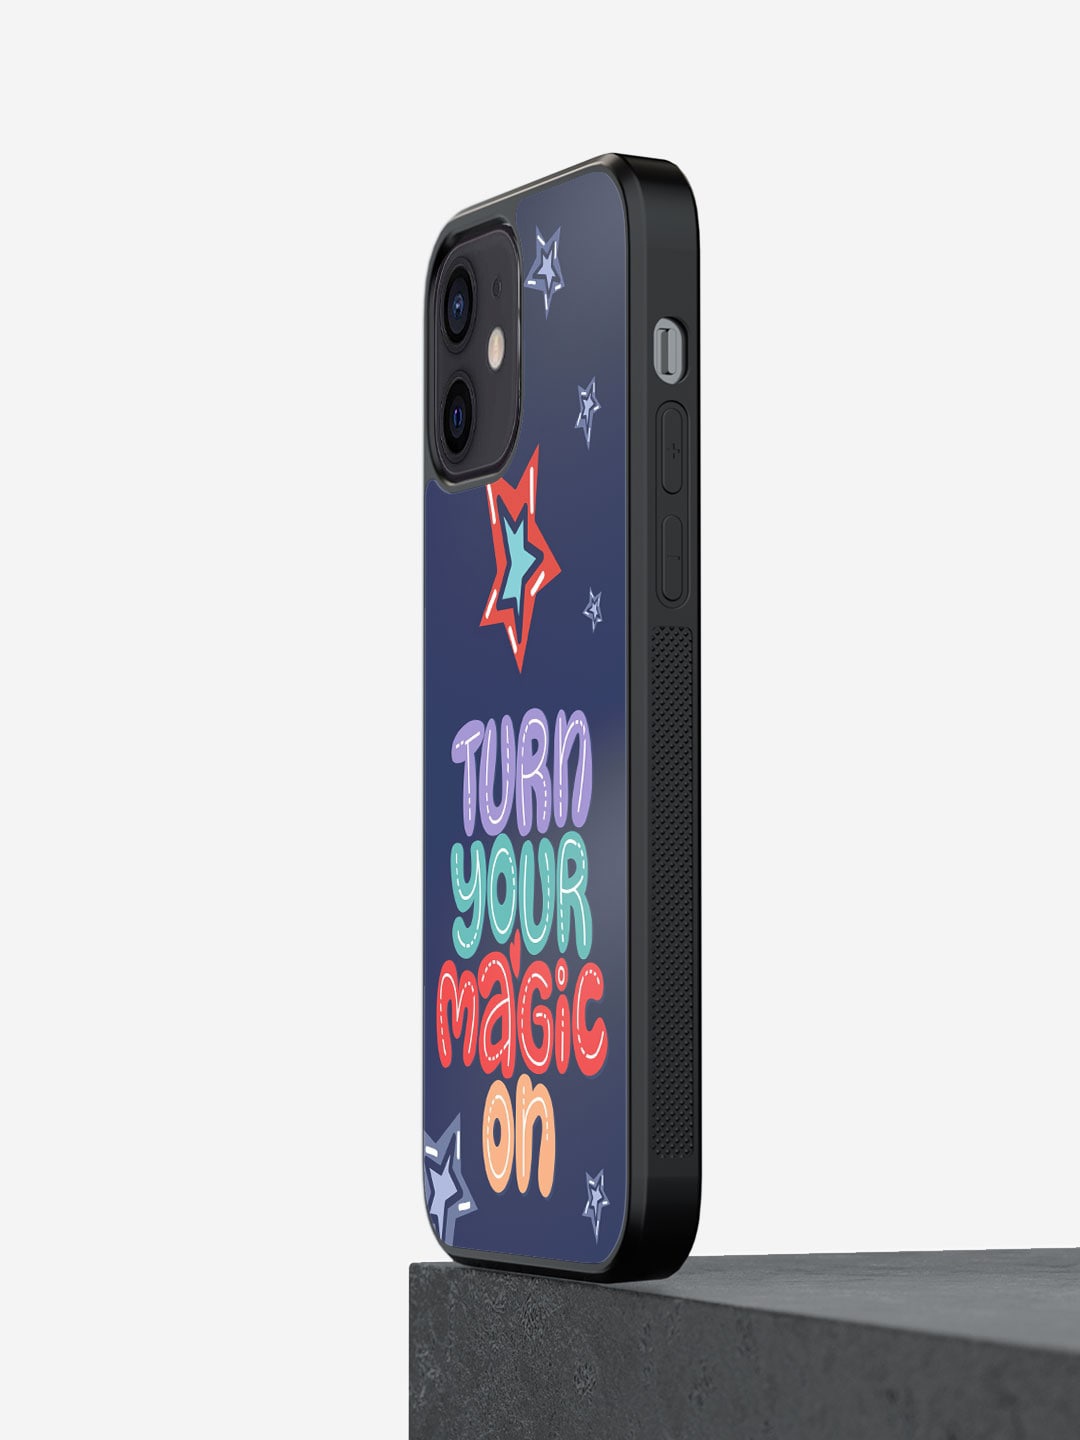 

macmerise Turn Your Magic On Printed iPhone 12 Phone Bumper Case Cover, Blue